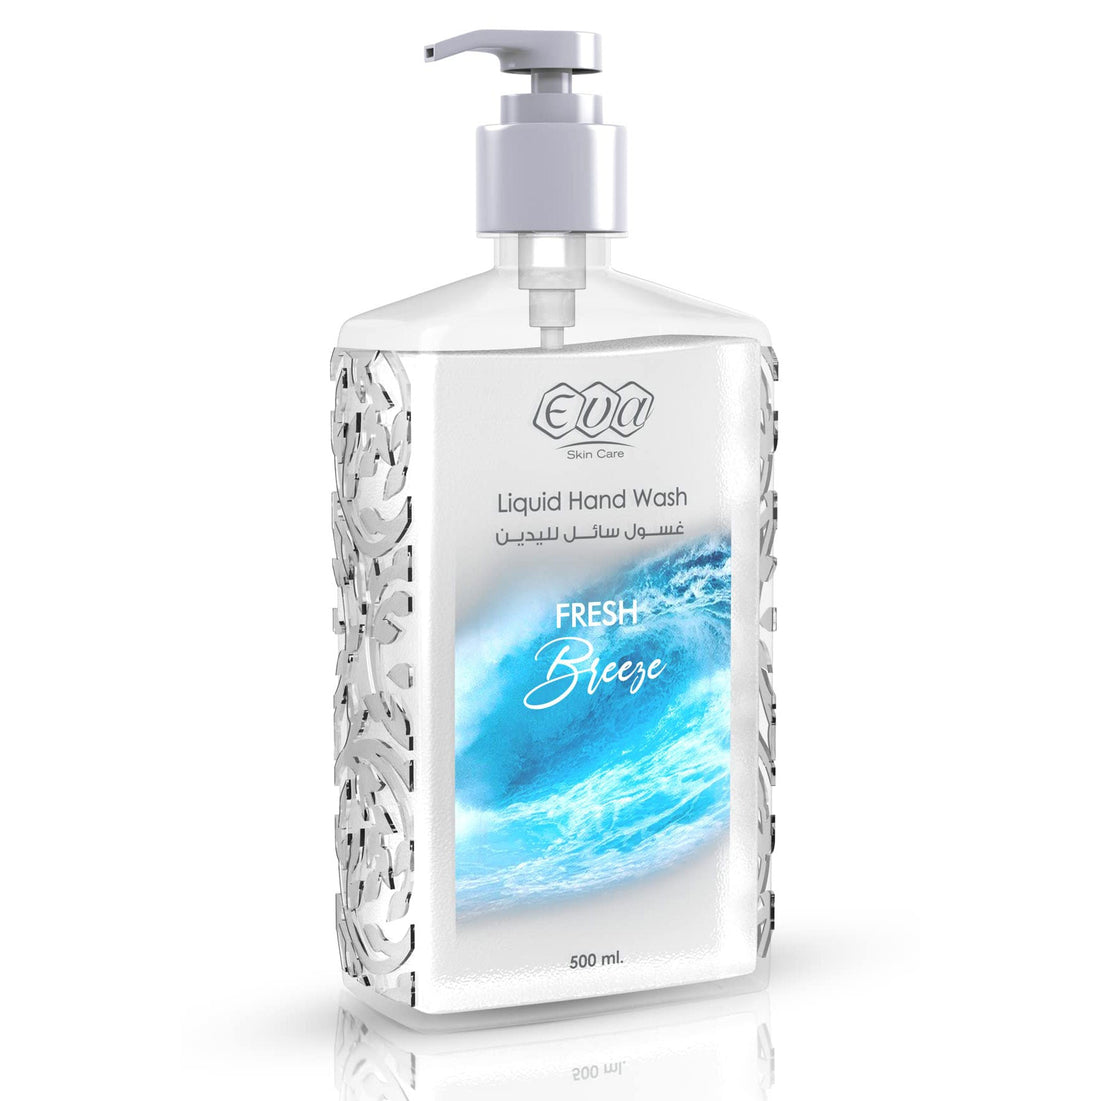 Eva Skincare Liquid Hand Wash 500 ml - Fresh Breeze- (15%)